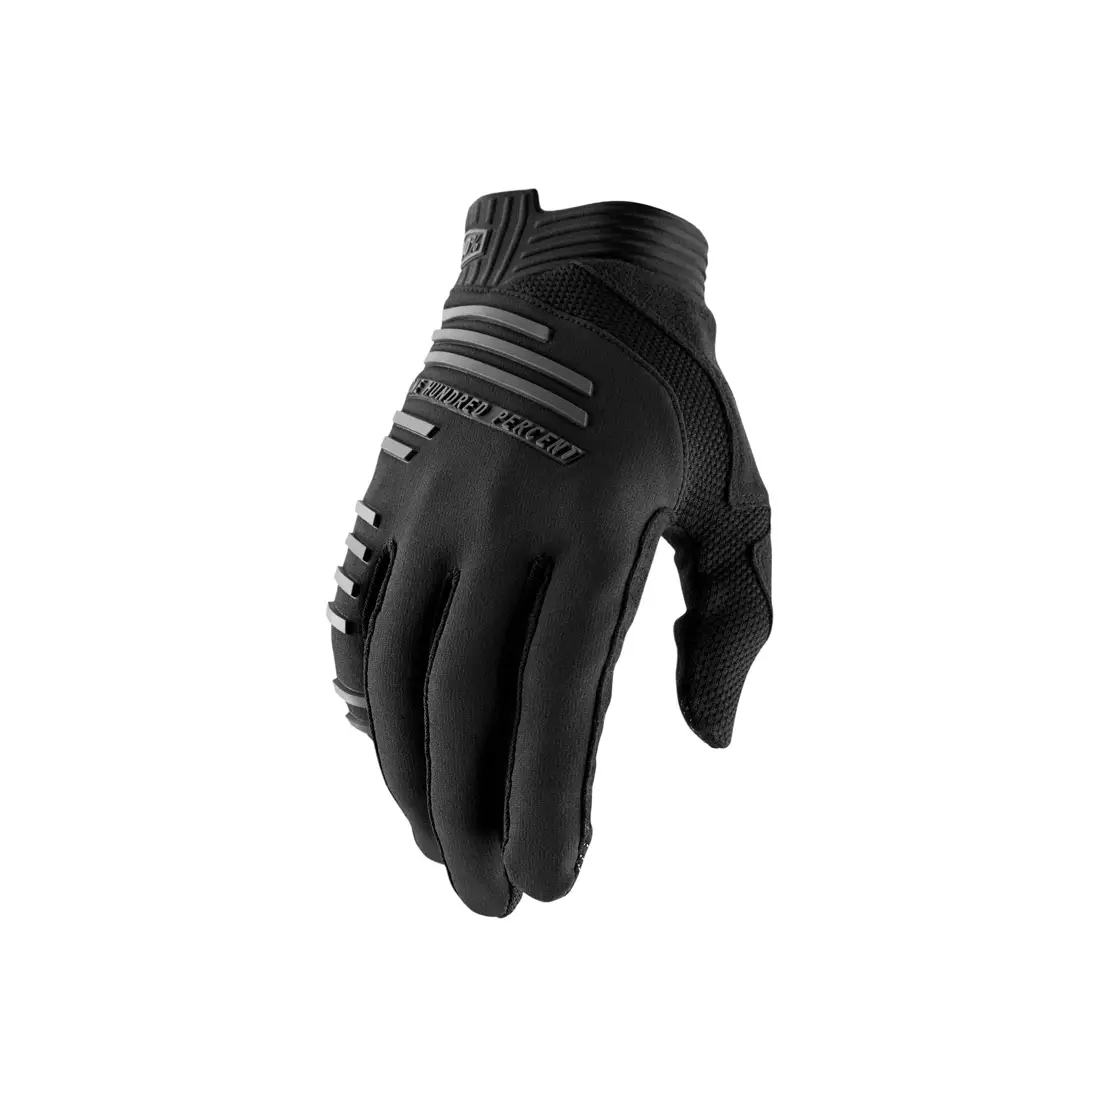 100% cyklistické rukavice r-core čierna STO-10017-001-12